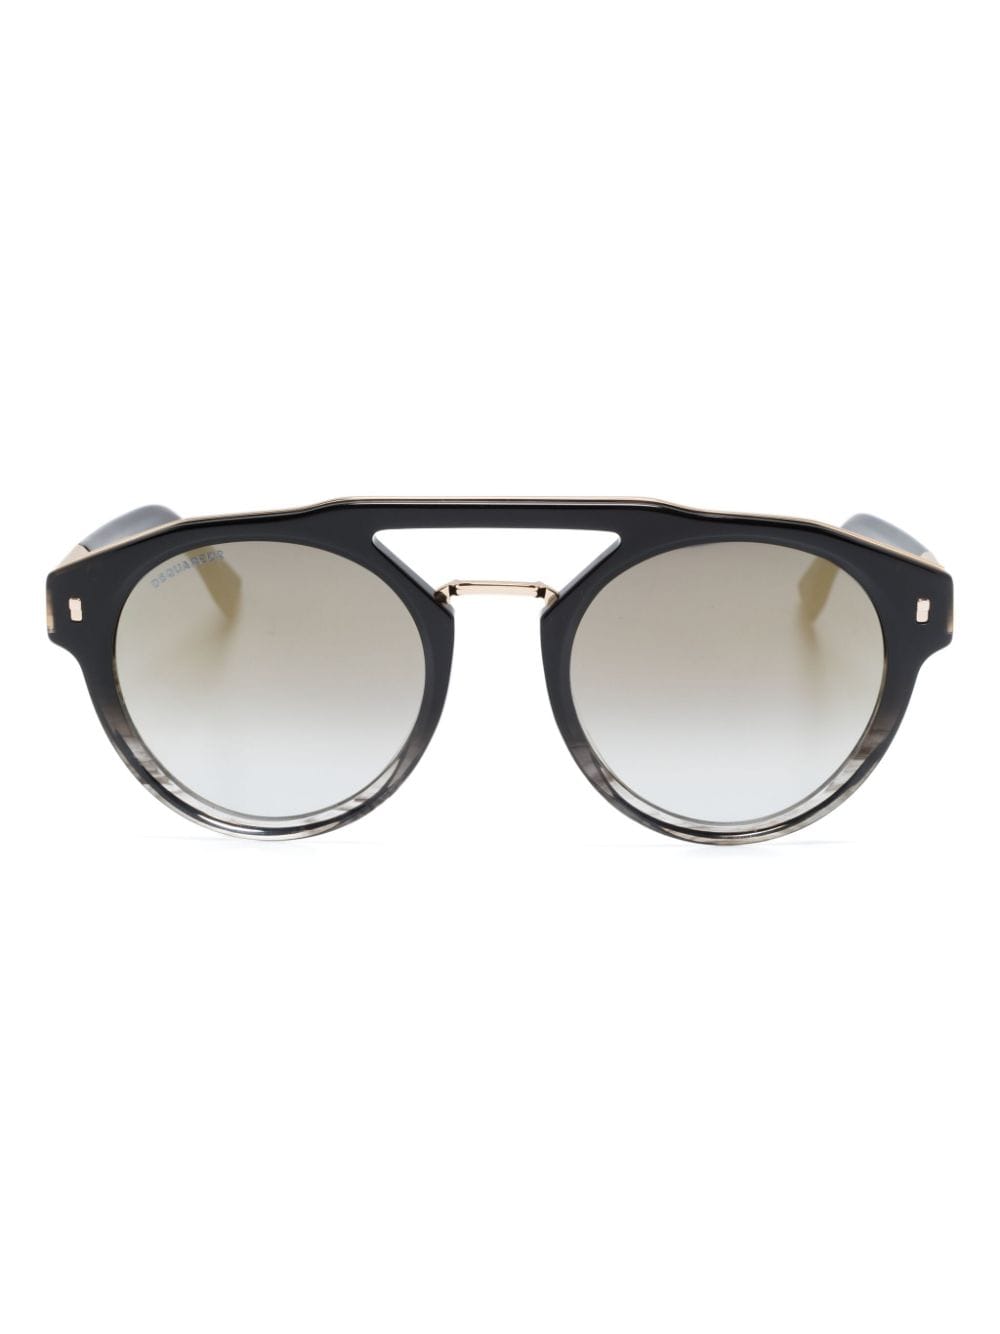 Dsquared2 Eyewear Hype ombré pantos-frame sunglasses - Black von Dsquared2 Eyewear